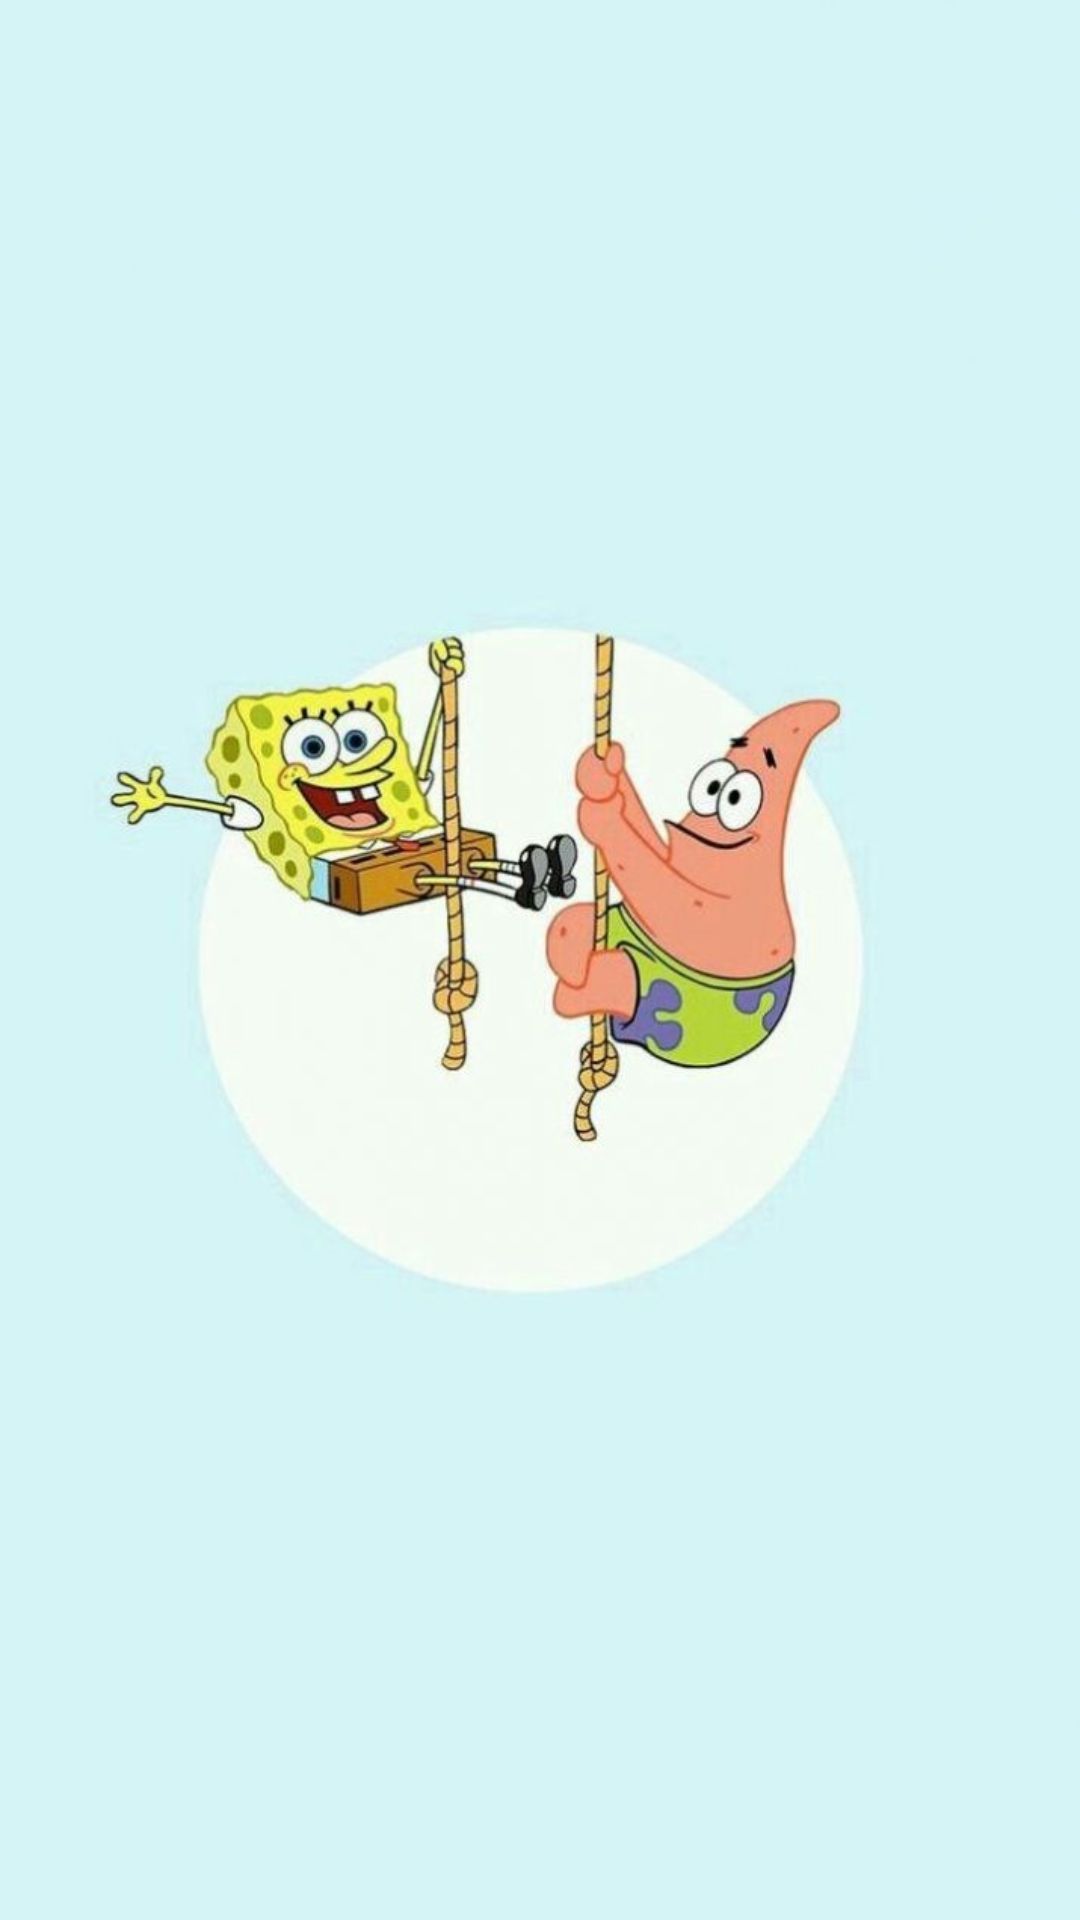 Spongebob And Patrick Images